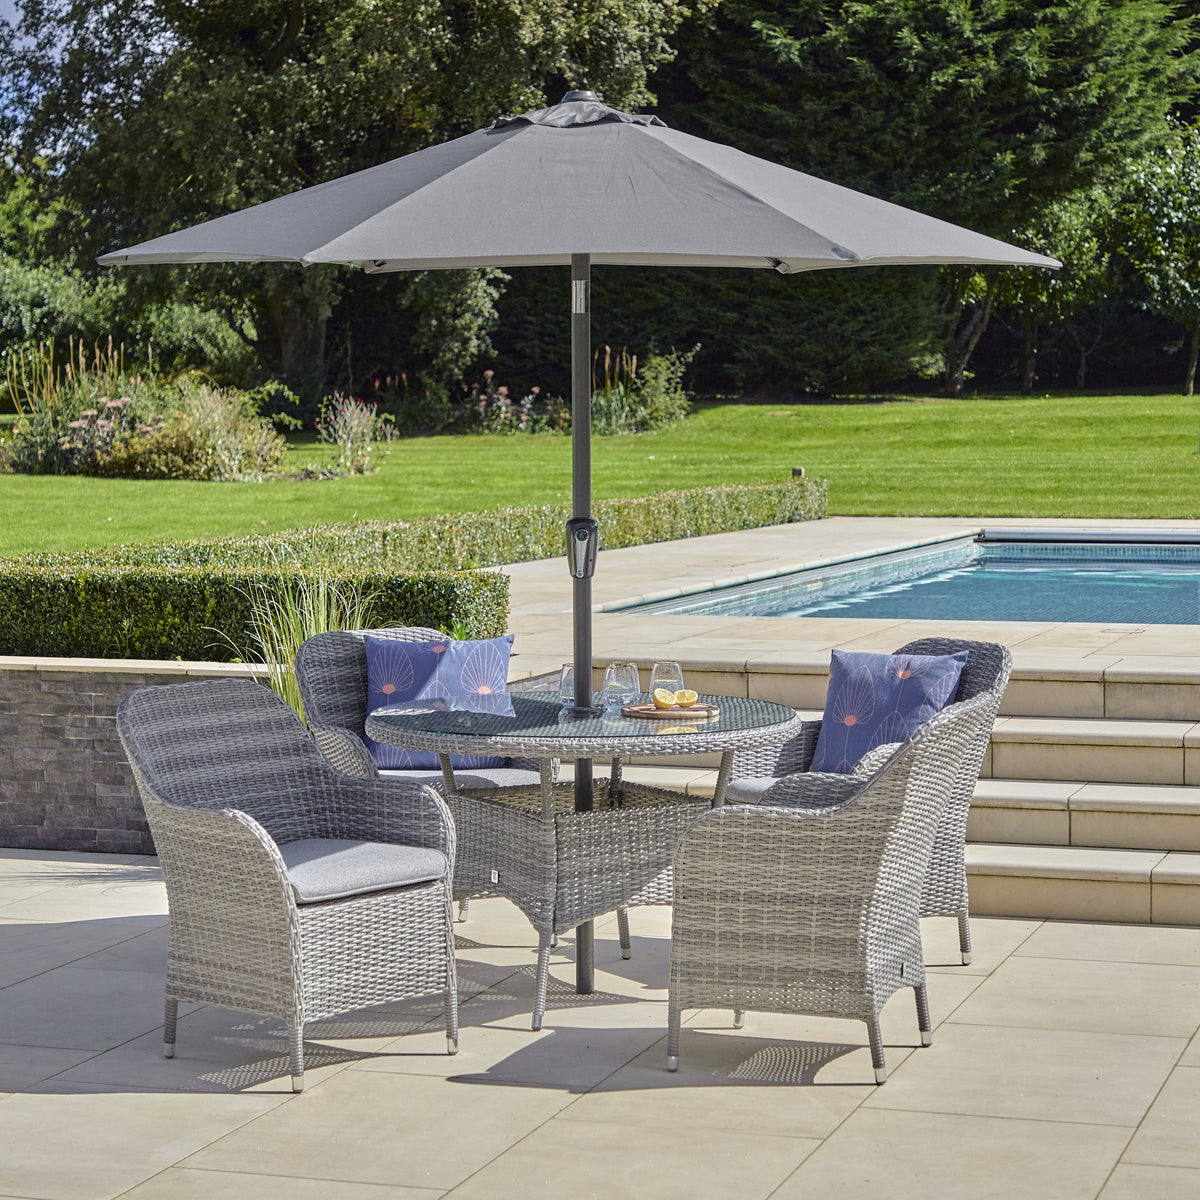 LG Outdoor Monte Carlo Stone Rattan Weave 4 Seat Garden Furniture Dining Set